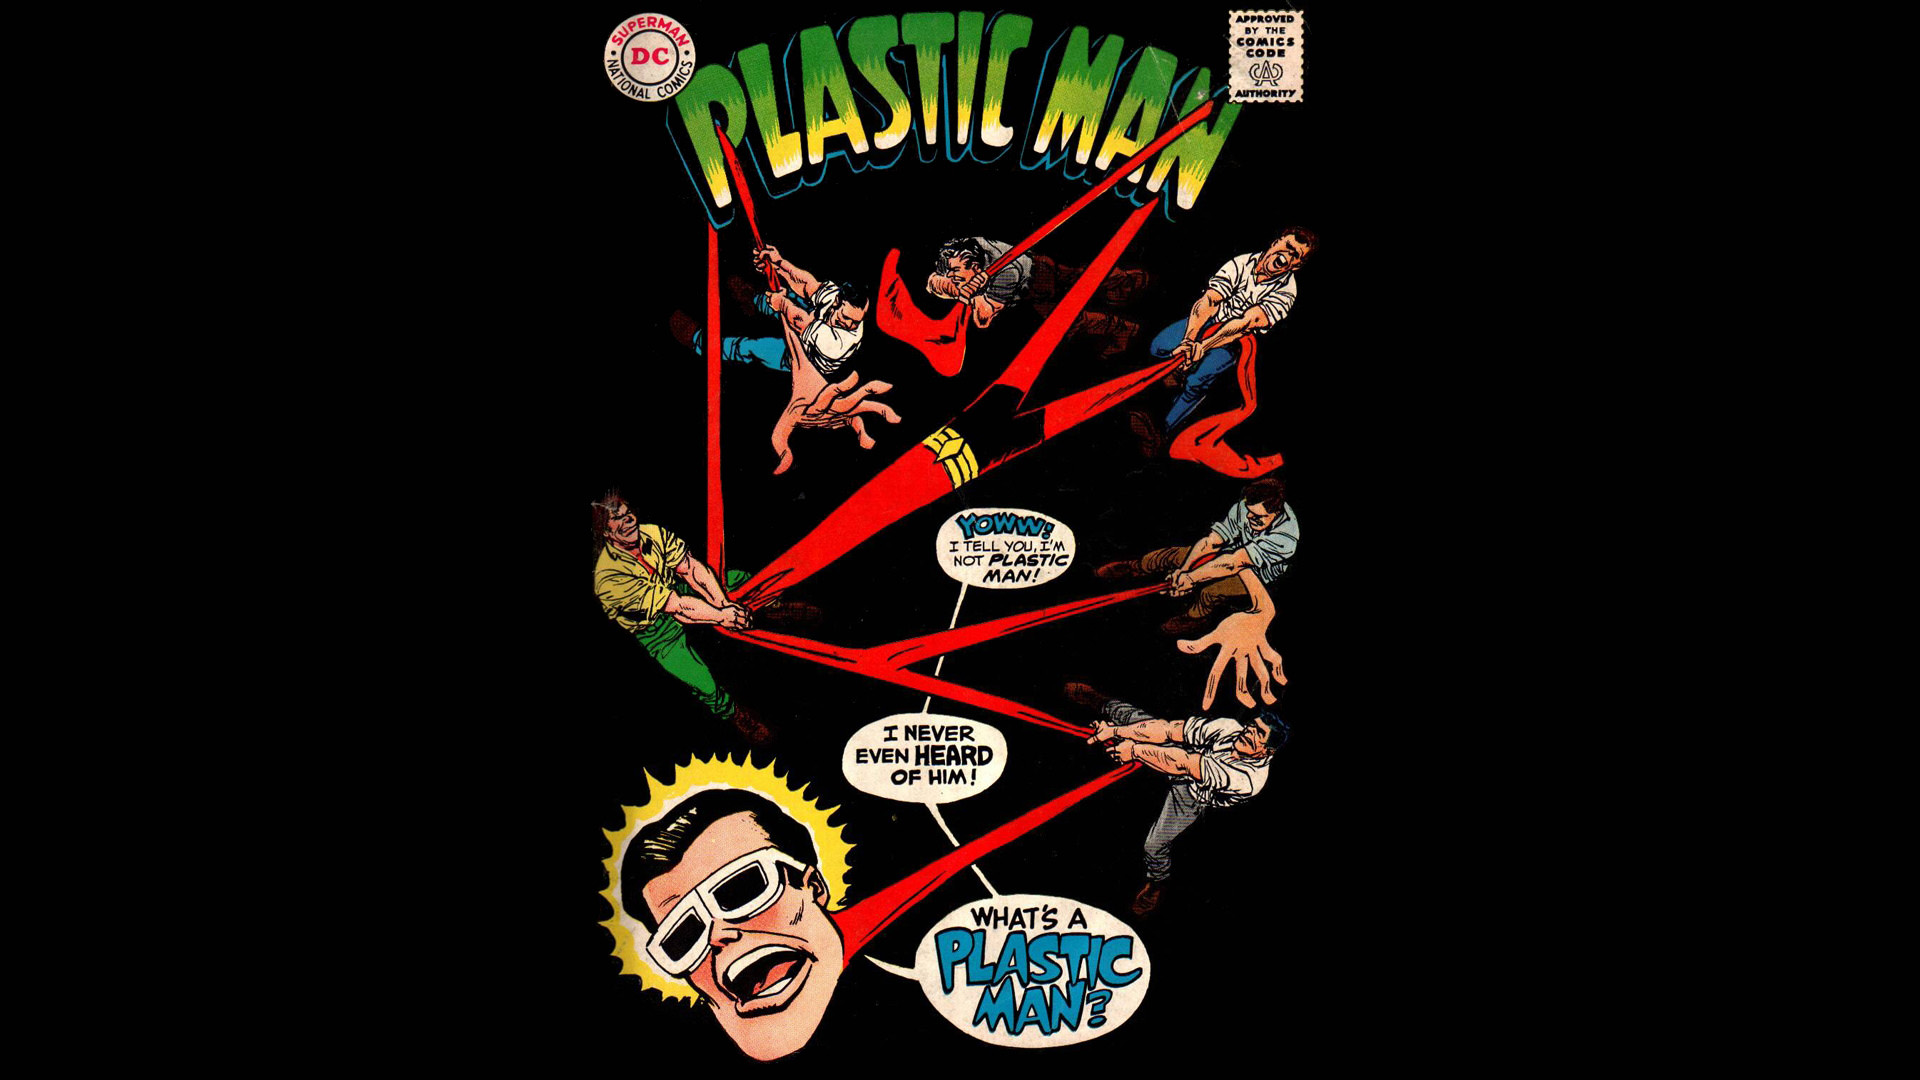 پلاستیک من - دی سی کامیکس - dc comics - plastic man